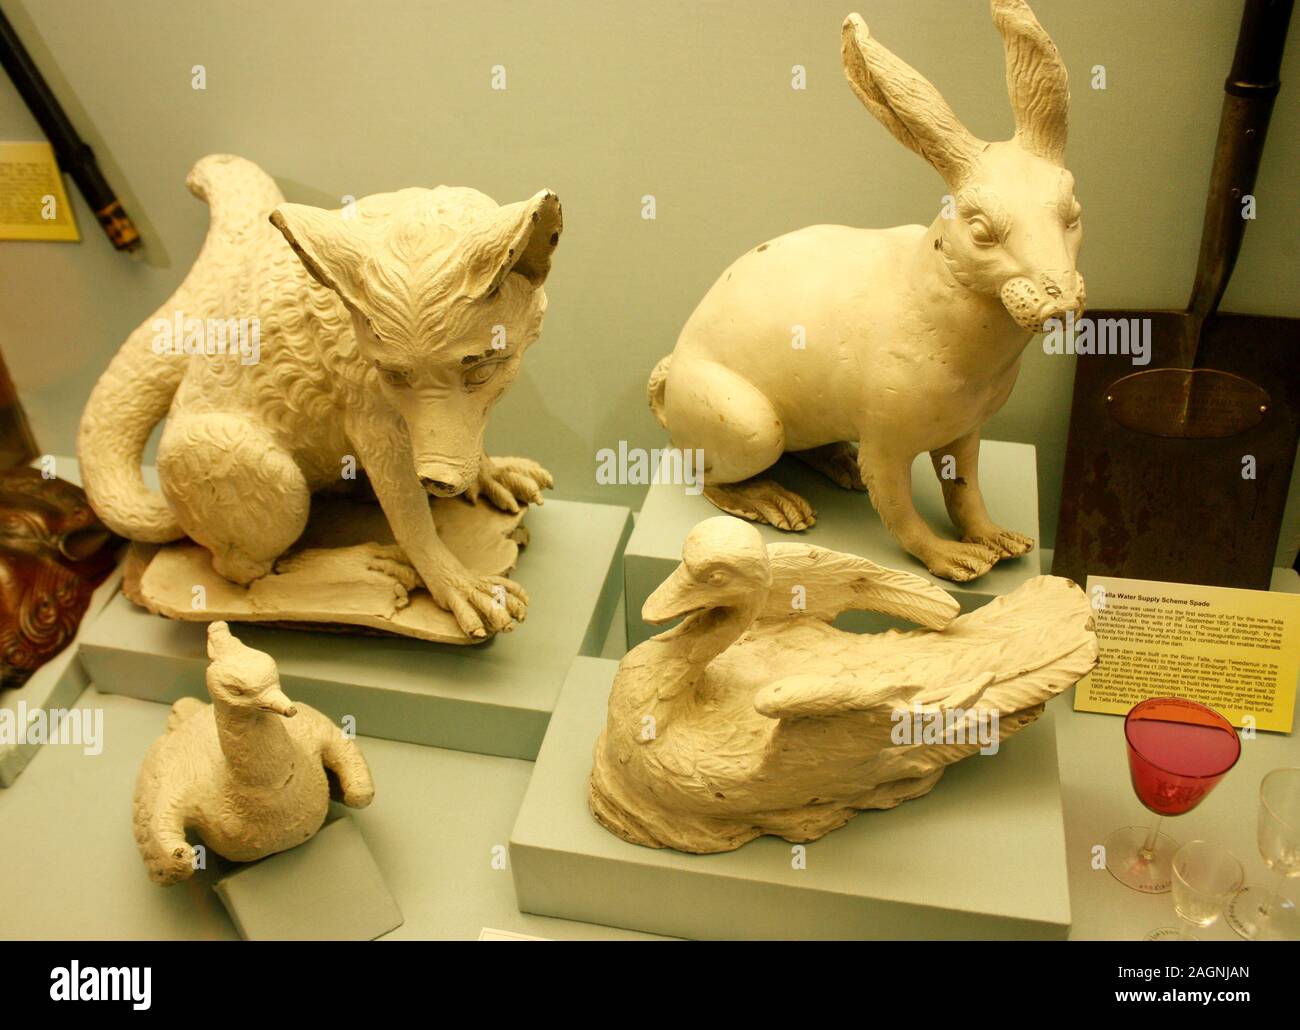 Animals statues on display in Edinburgh museum Stock Photo